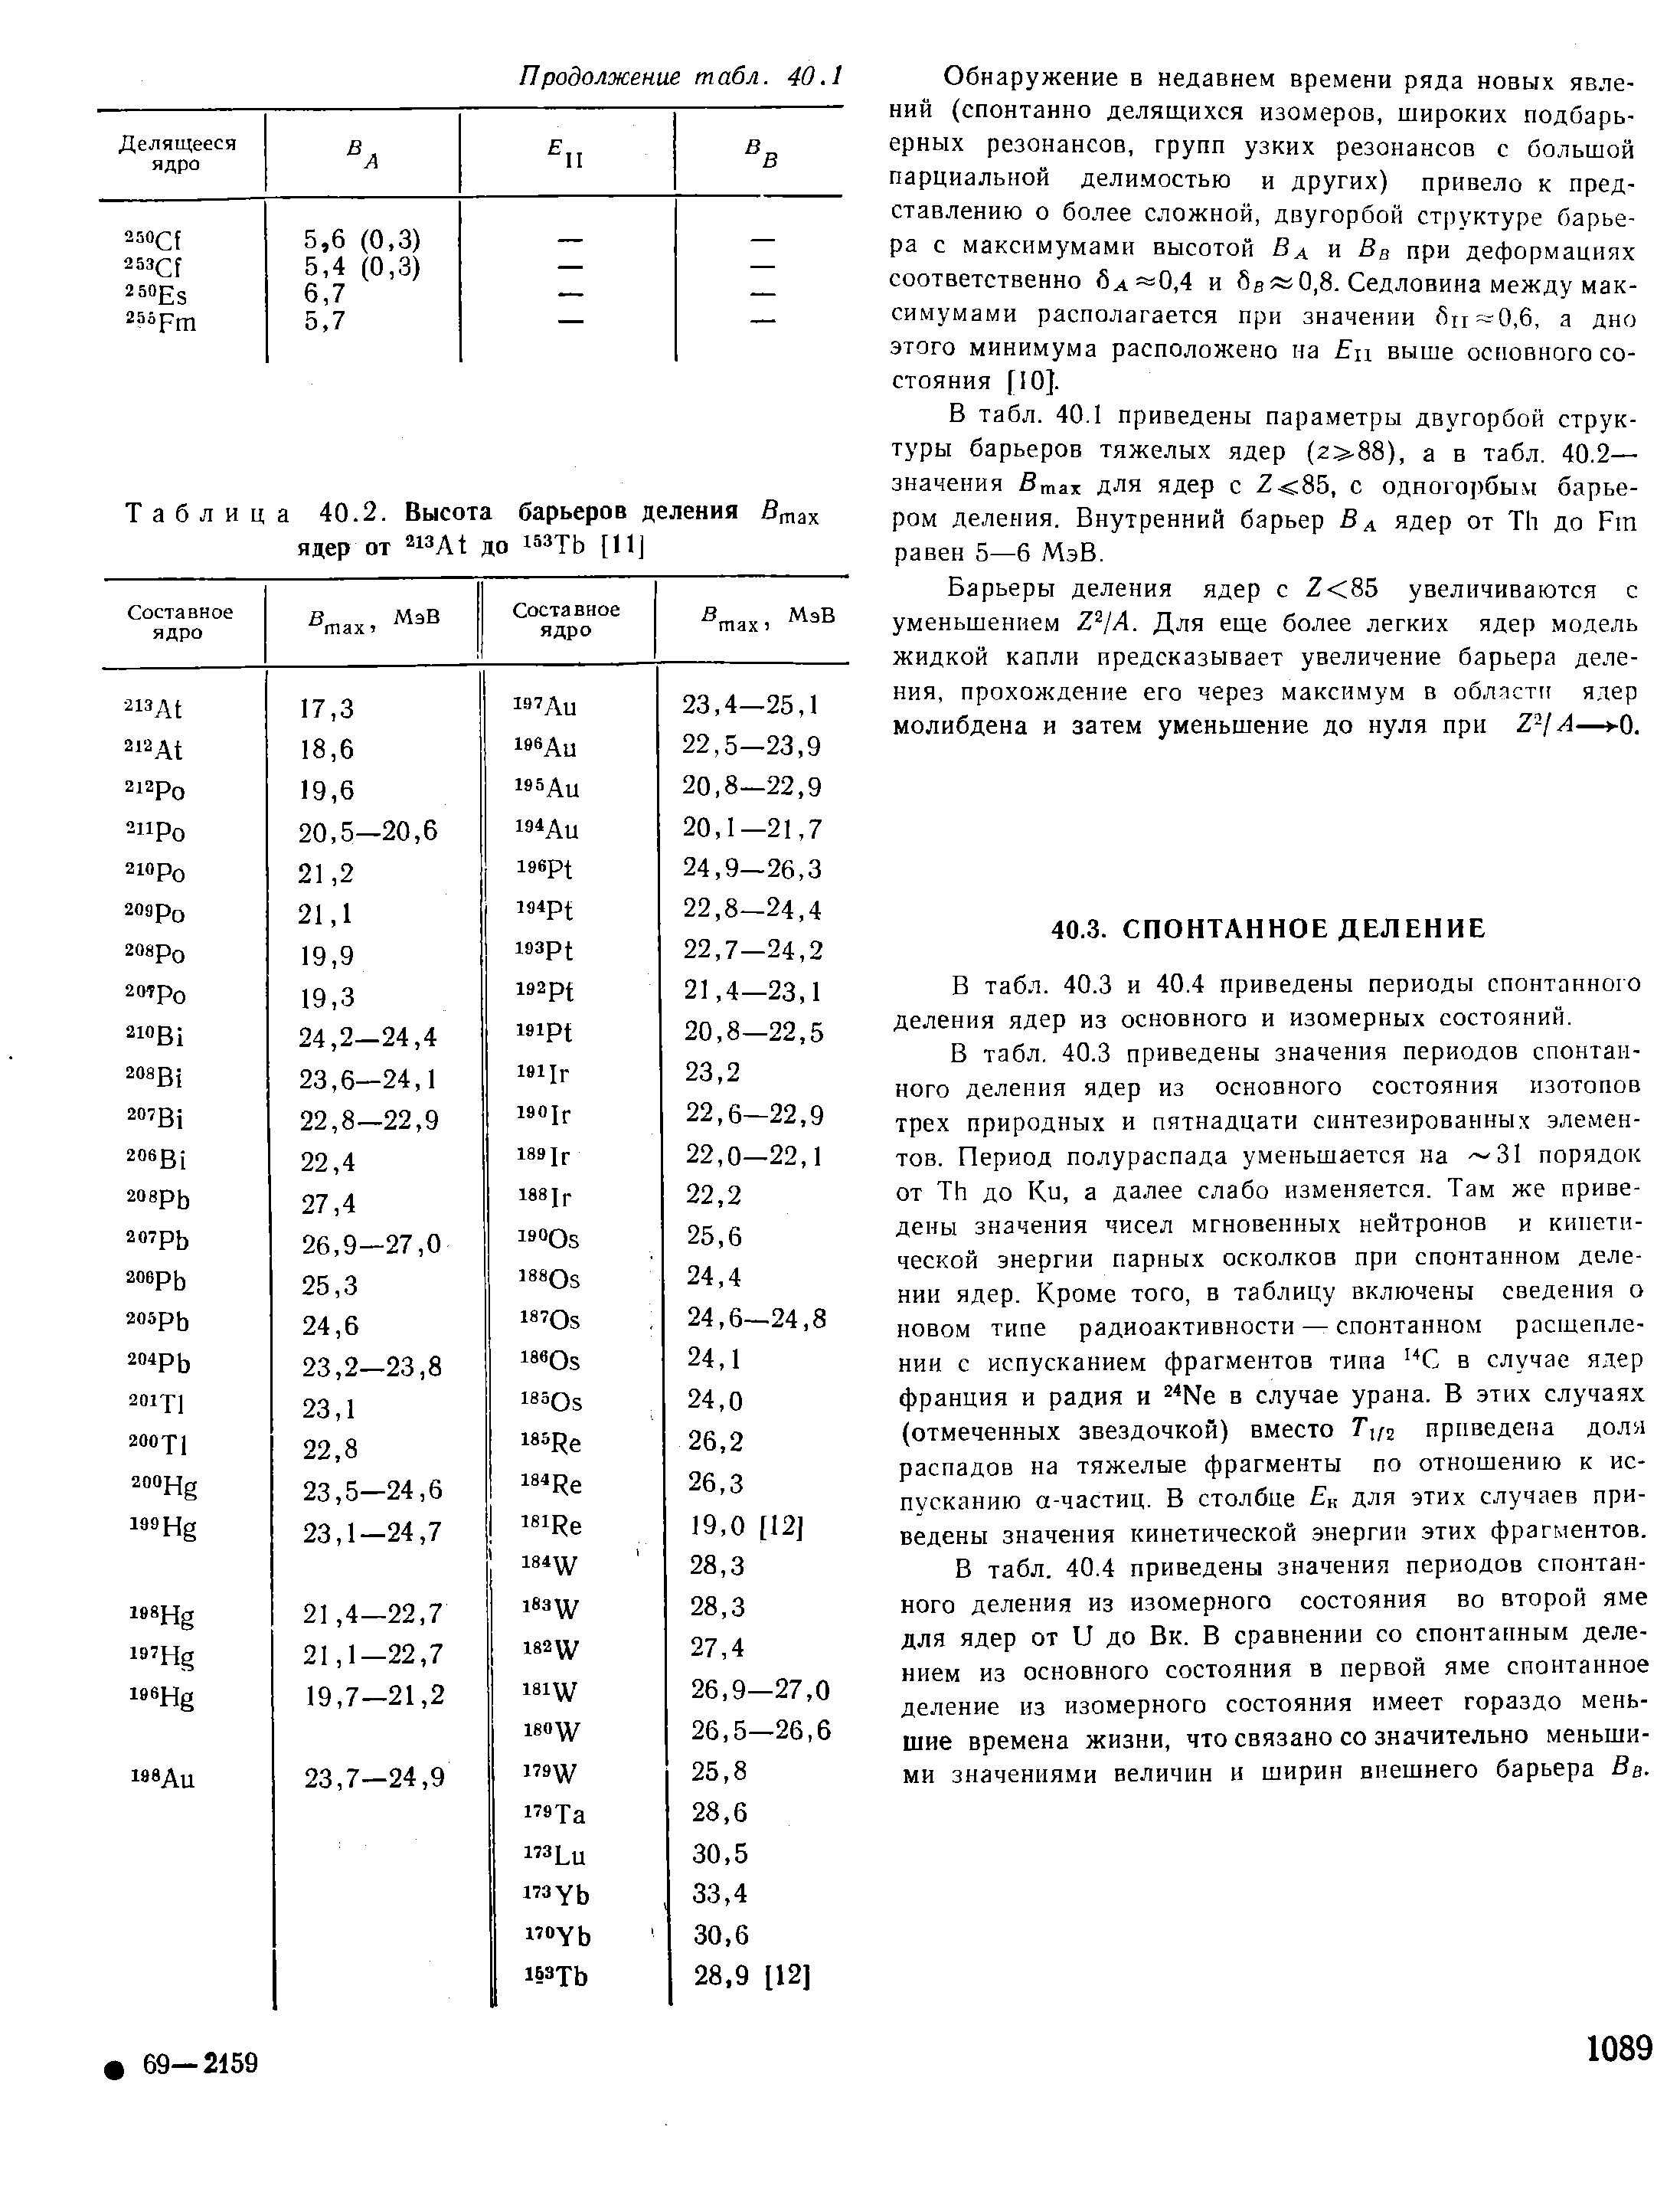 Таблица 40.2. Высота барьеров деления ядер от 2i3At до i Tb [II]
